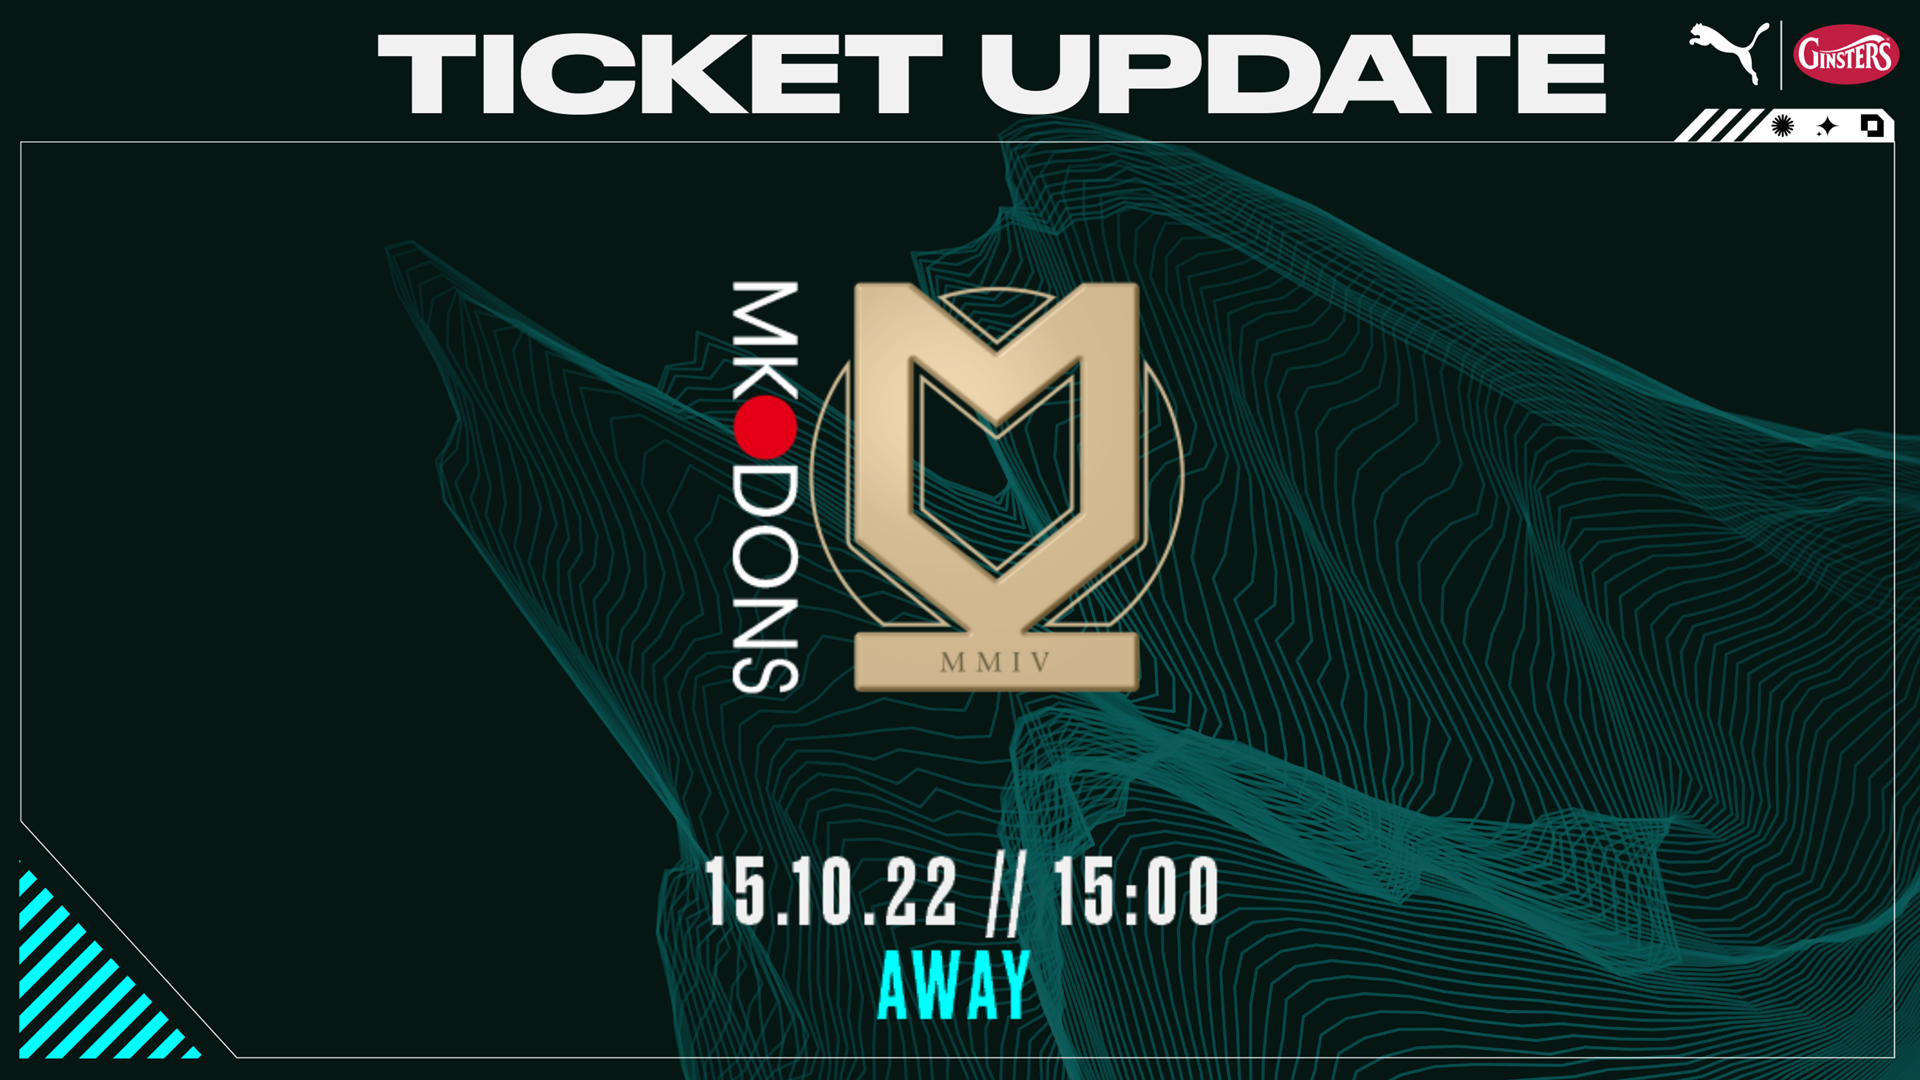 Ticket Update MK Dons